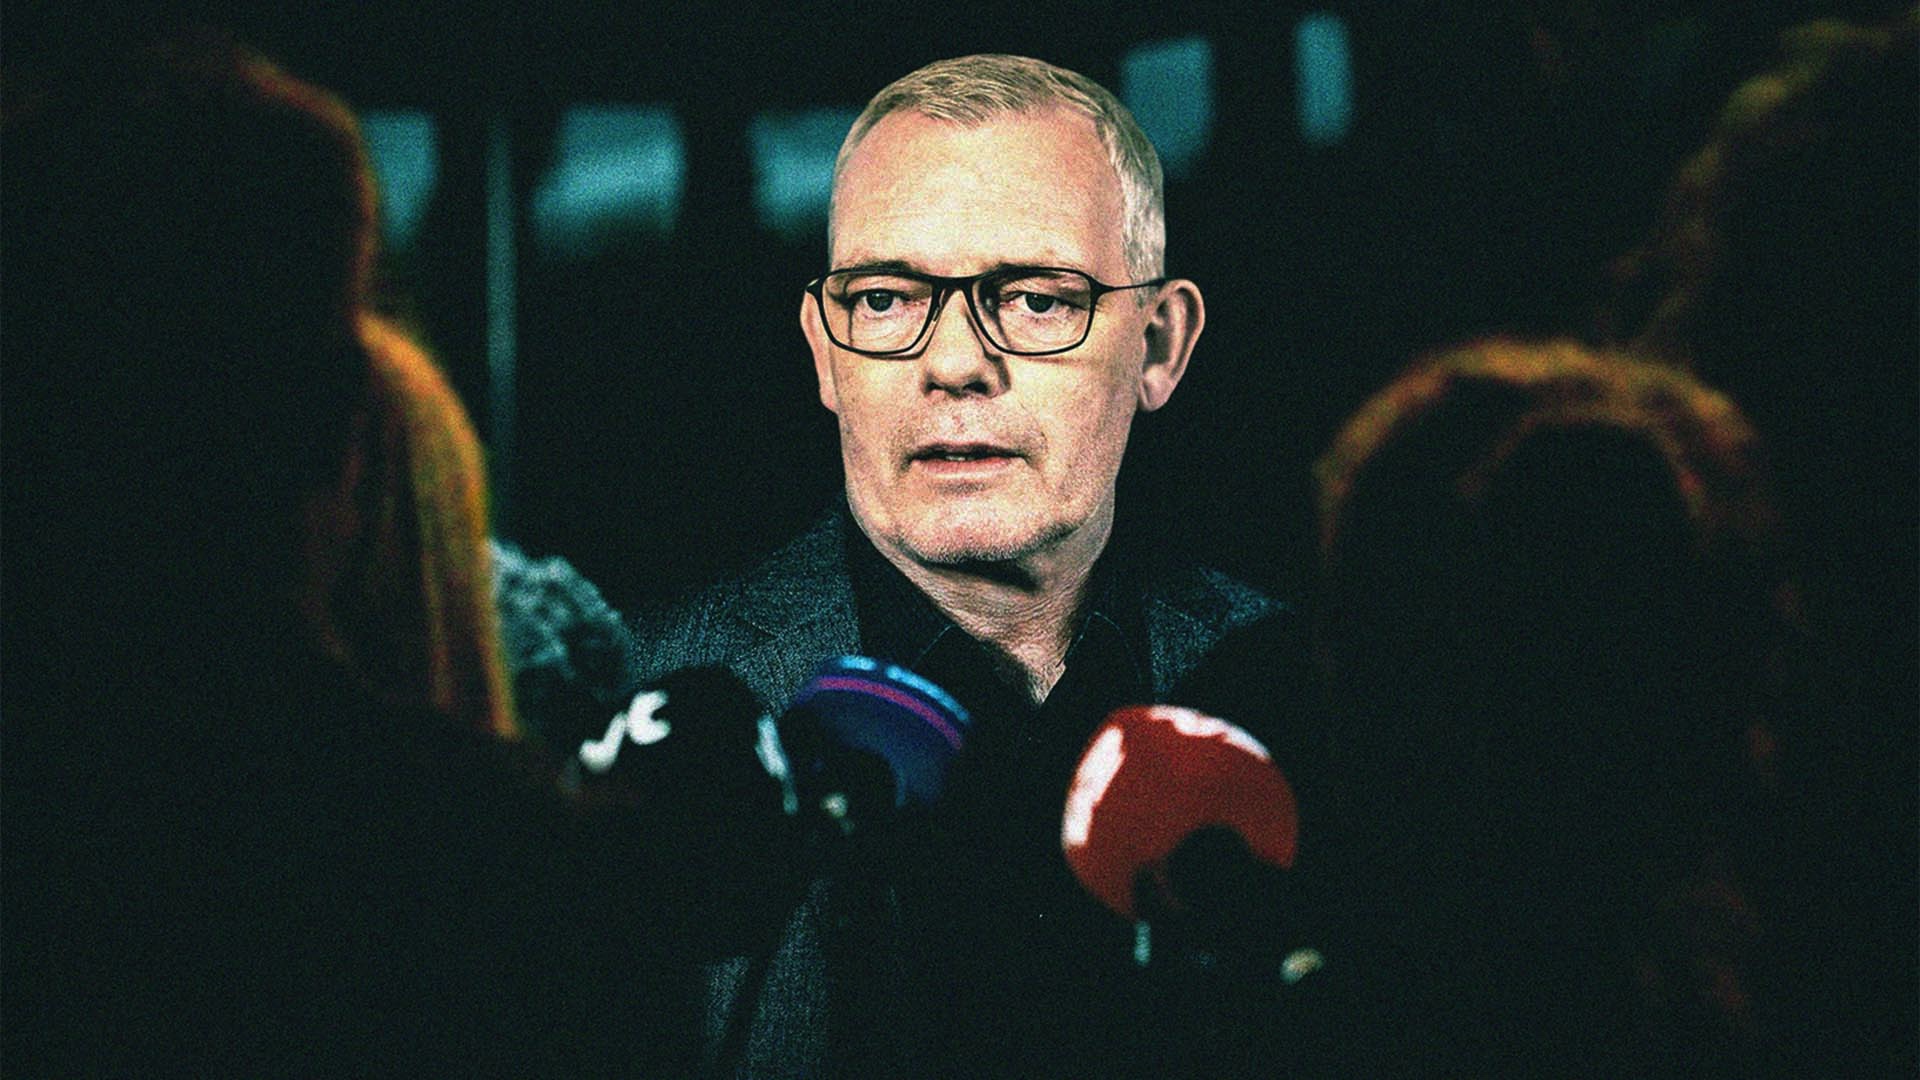 Søren Malling plays Jens Møller in The Investigation